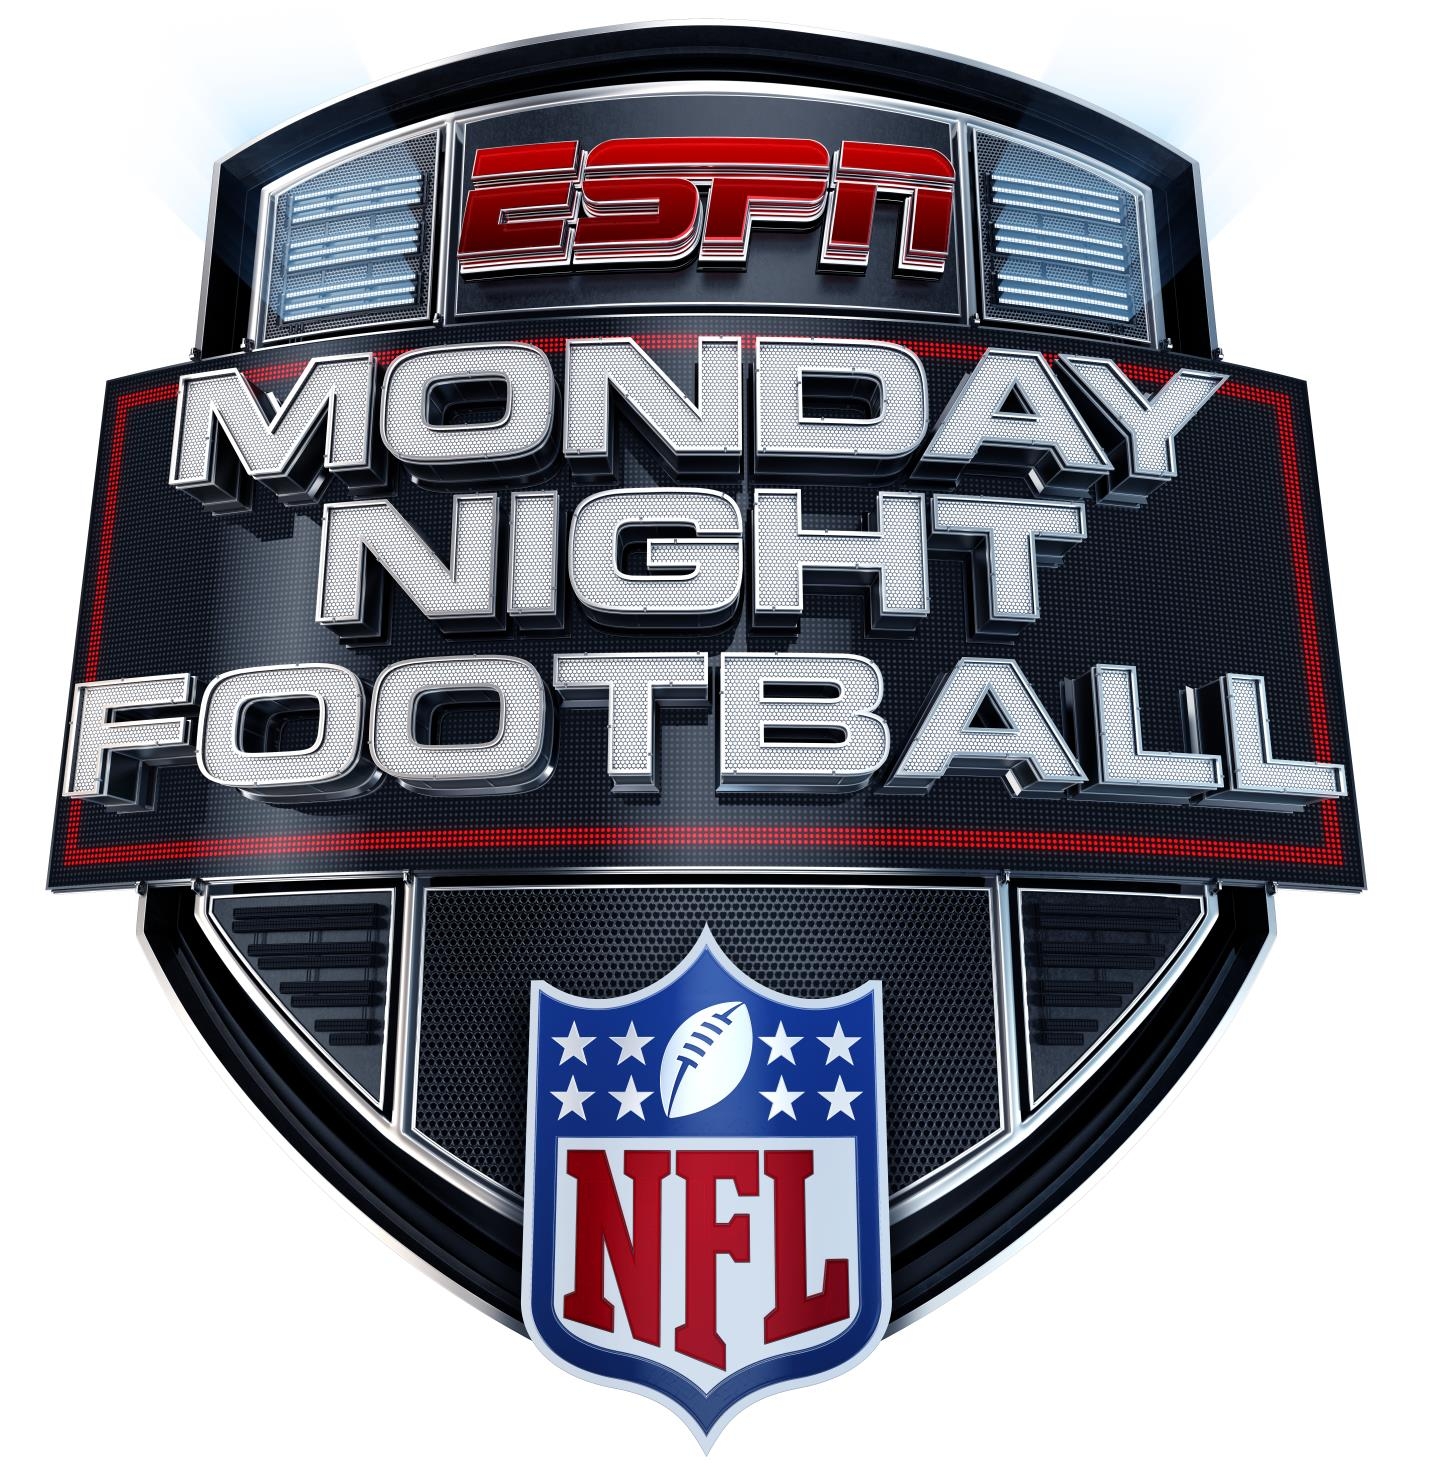 Monday Night Football, Logopedia